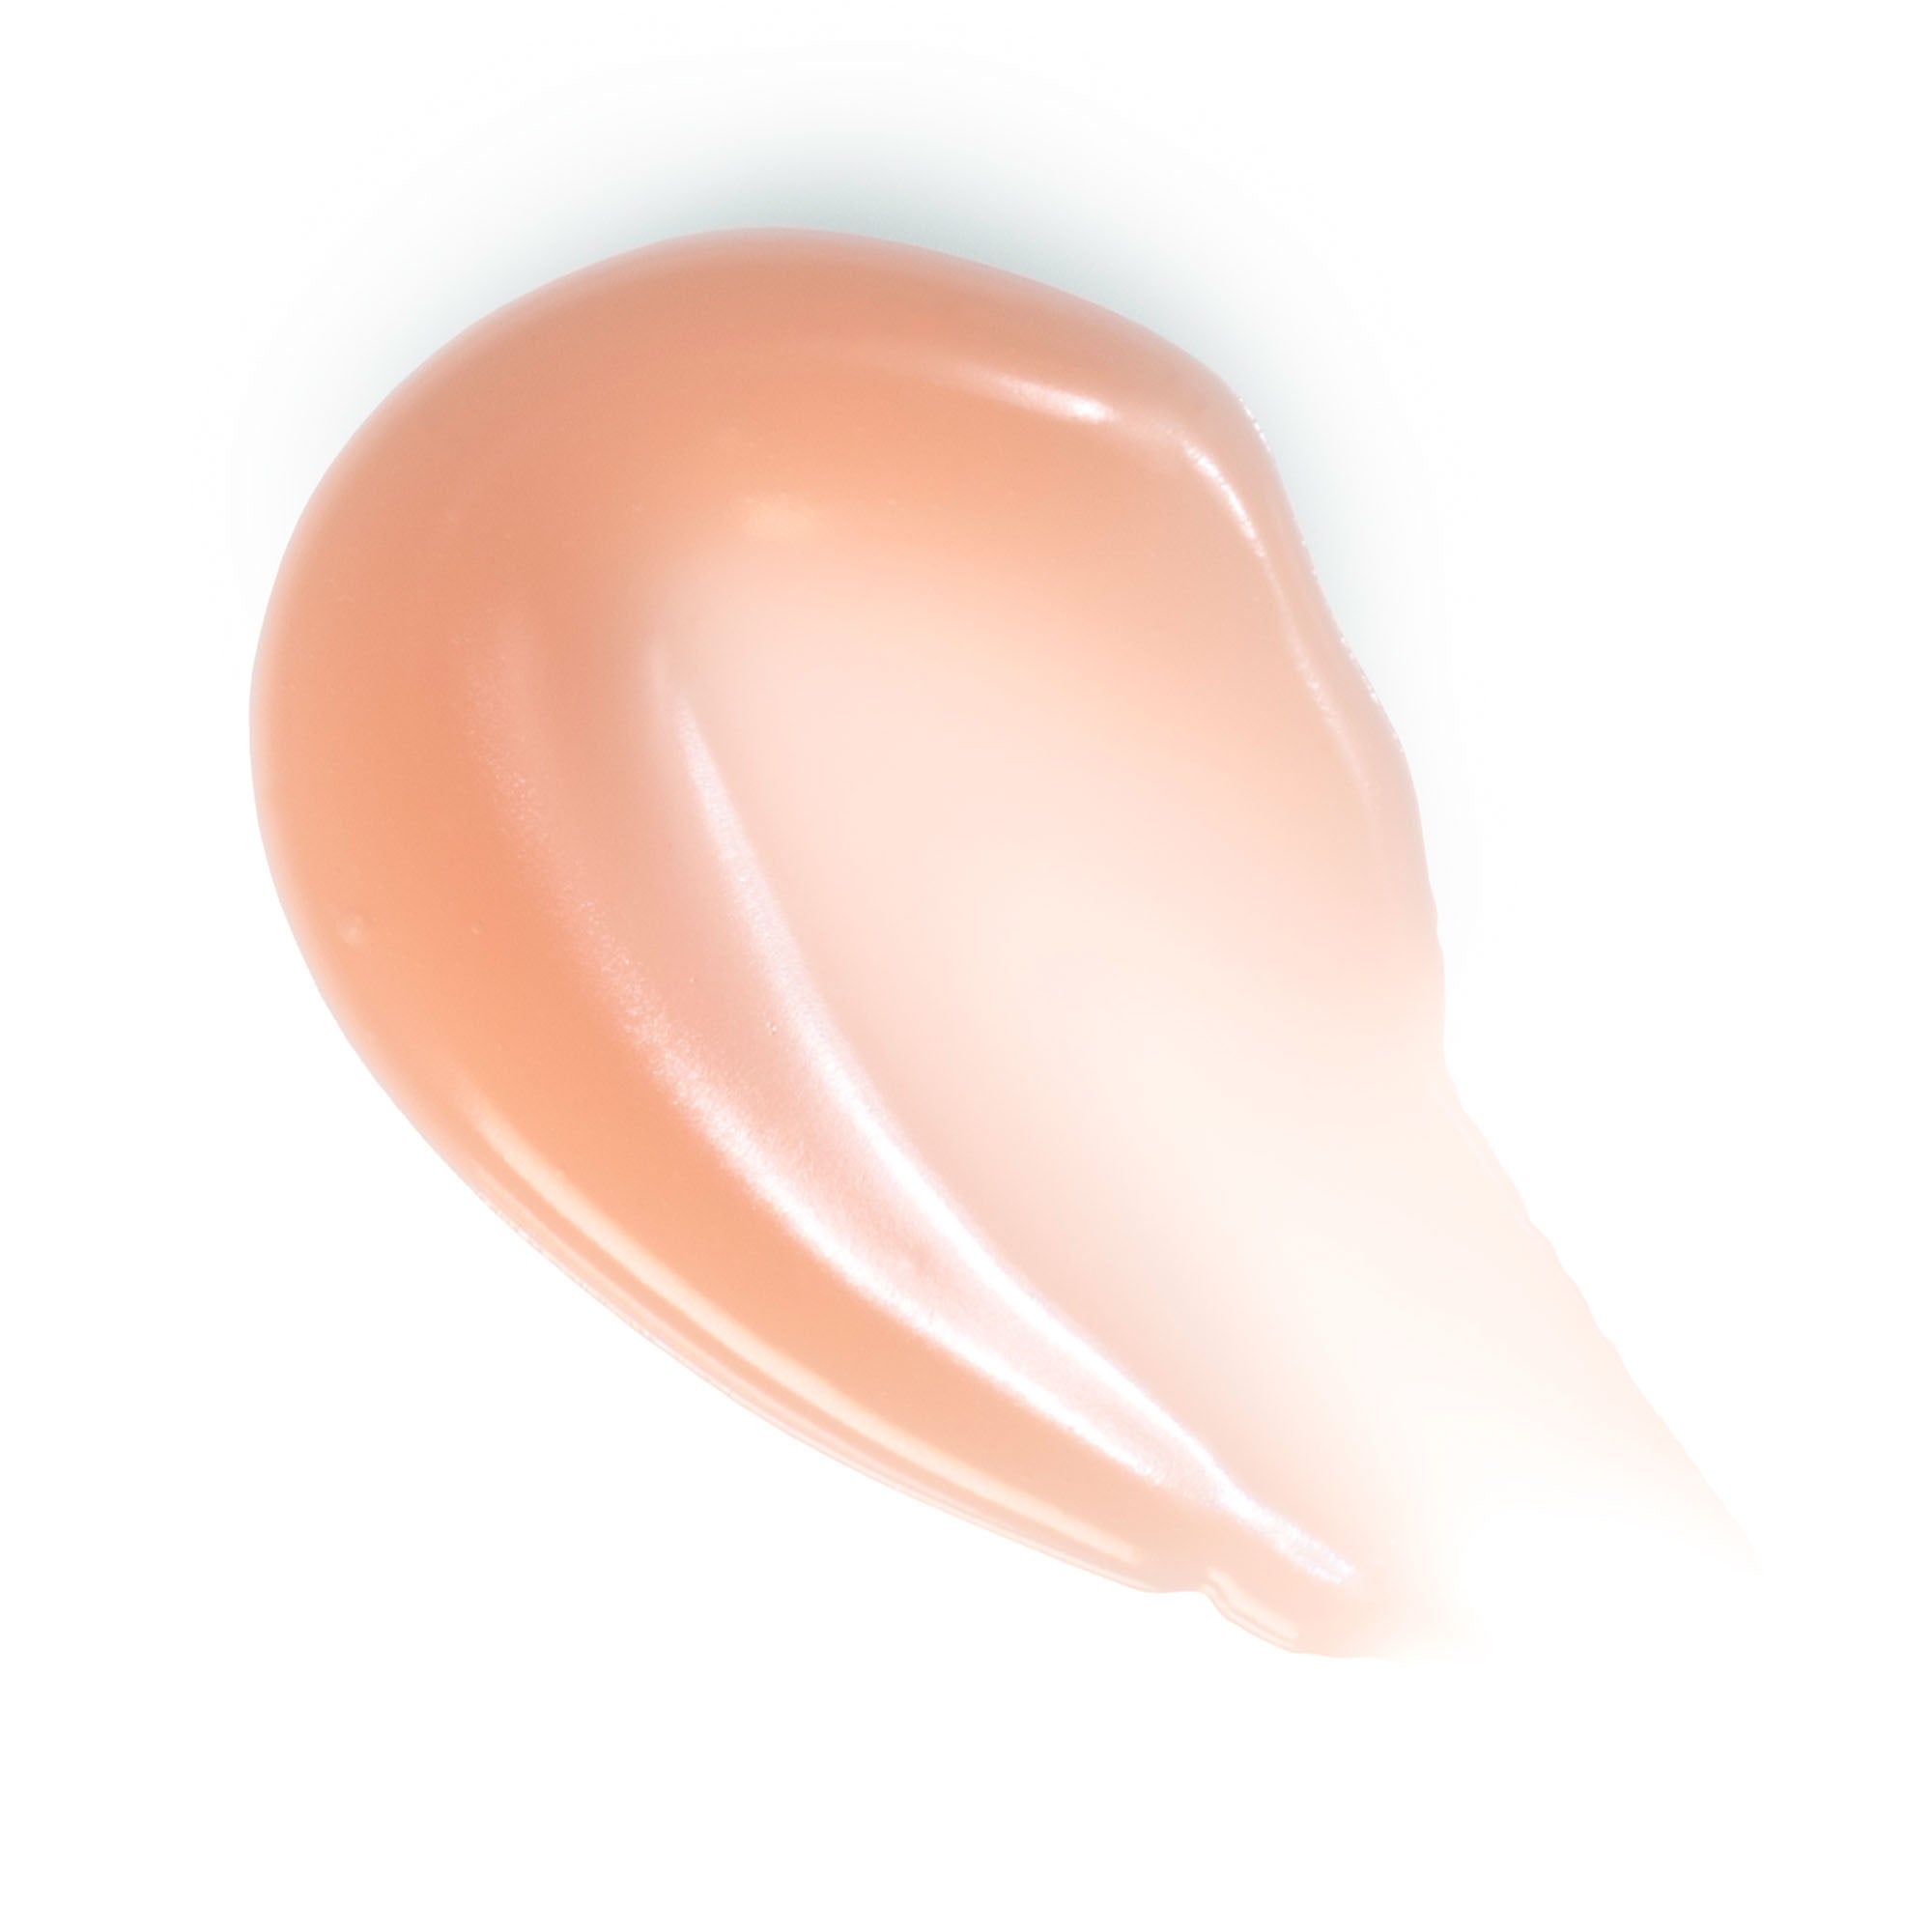 Rose Dew | Thorn Bite Peptide Plump Crème Lip Oil - Rituel de Fille